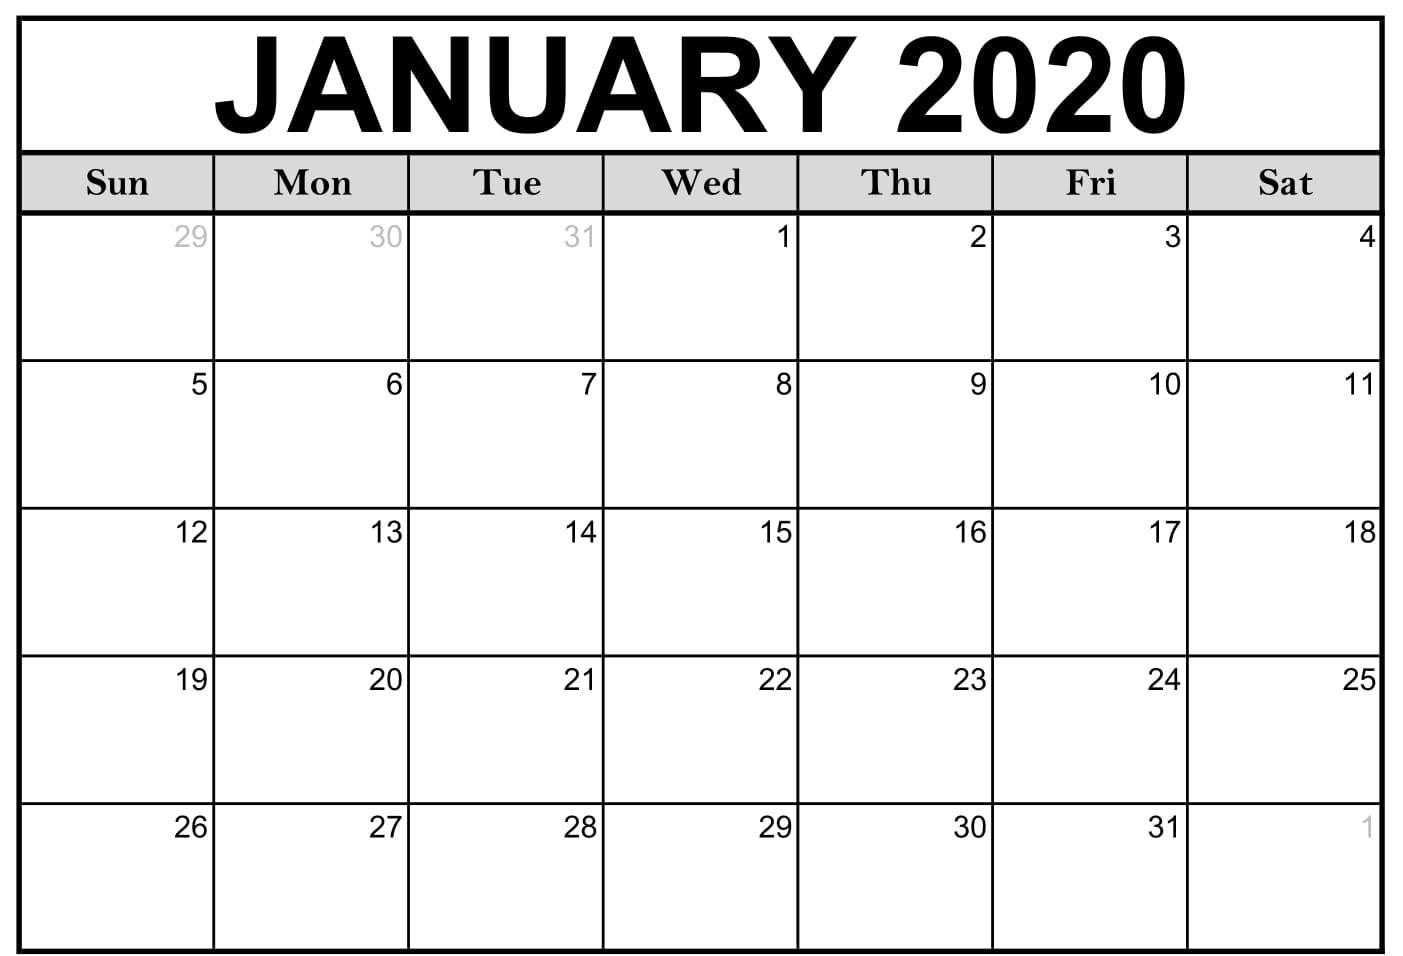 January 2020 Calendar Template | Printable Calendar Template